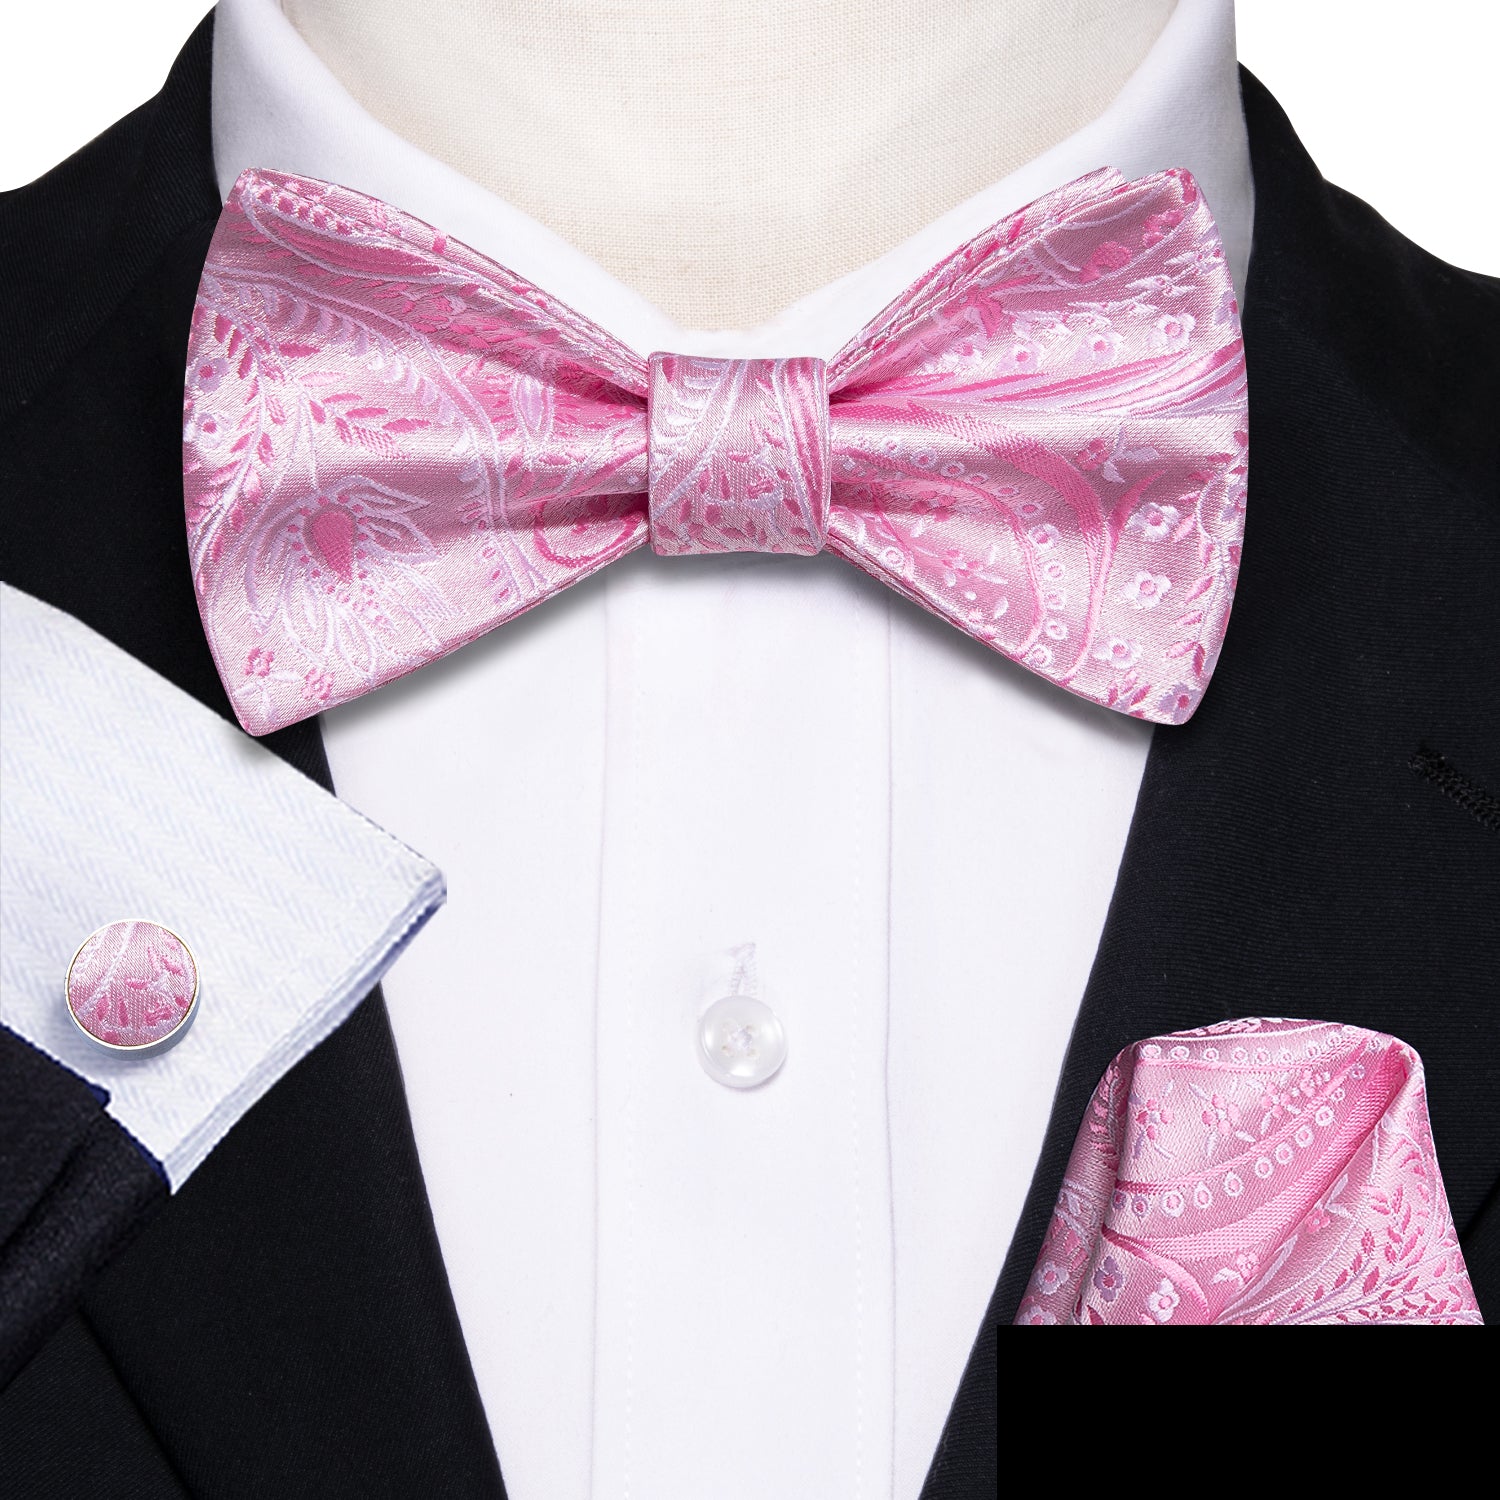 Pink Floral Self Tie Bow Tie Hanky Cufflinks Set